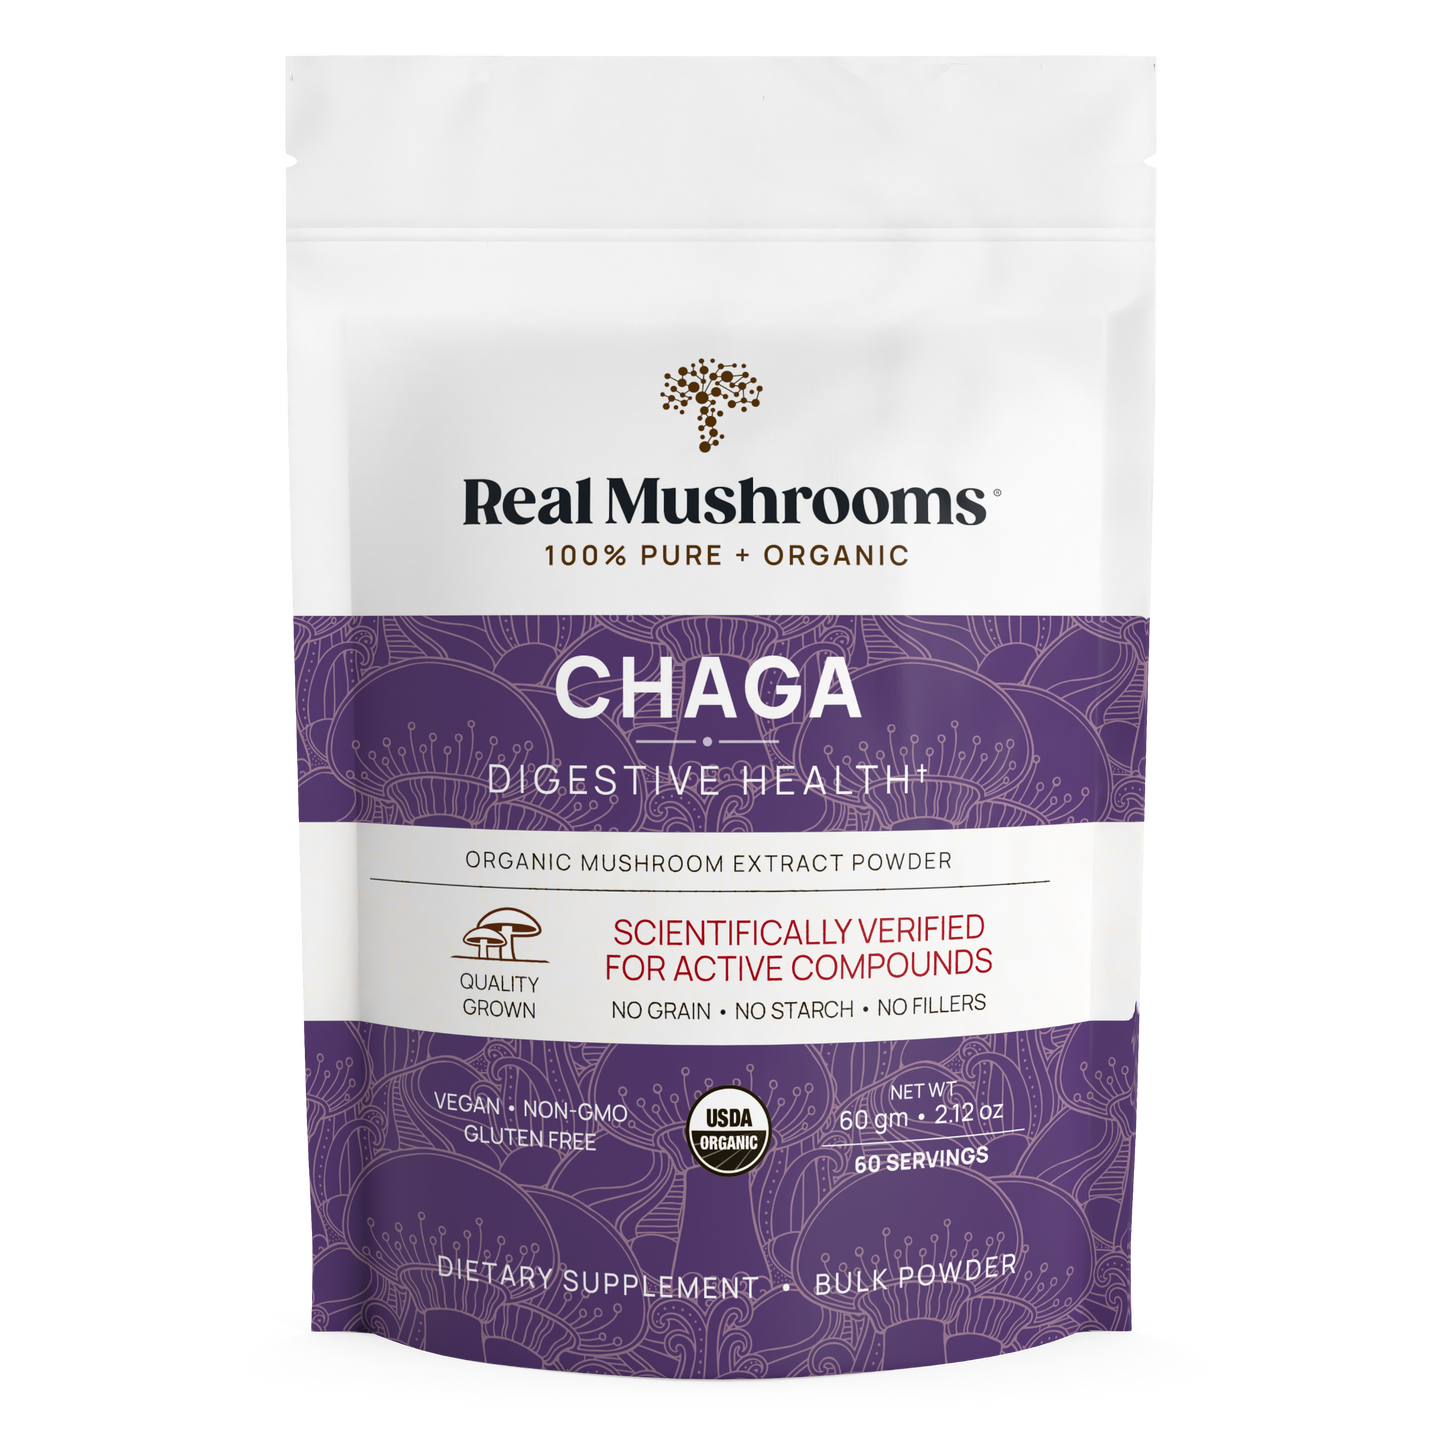 Real Mushrooms Organic Chaga Extract Powder.